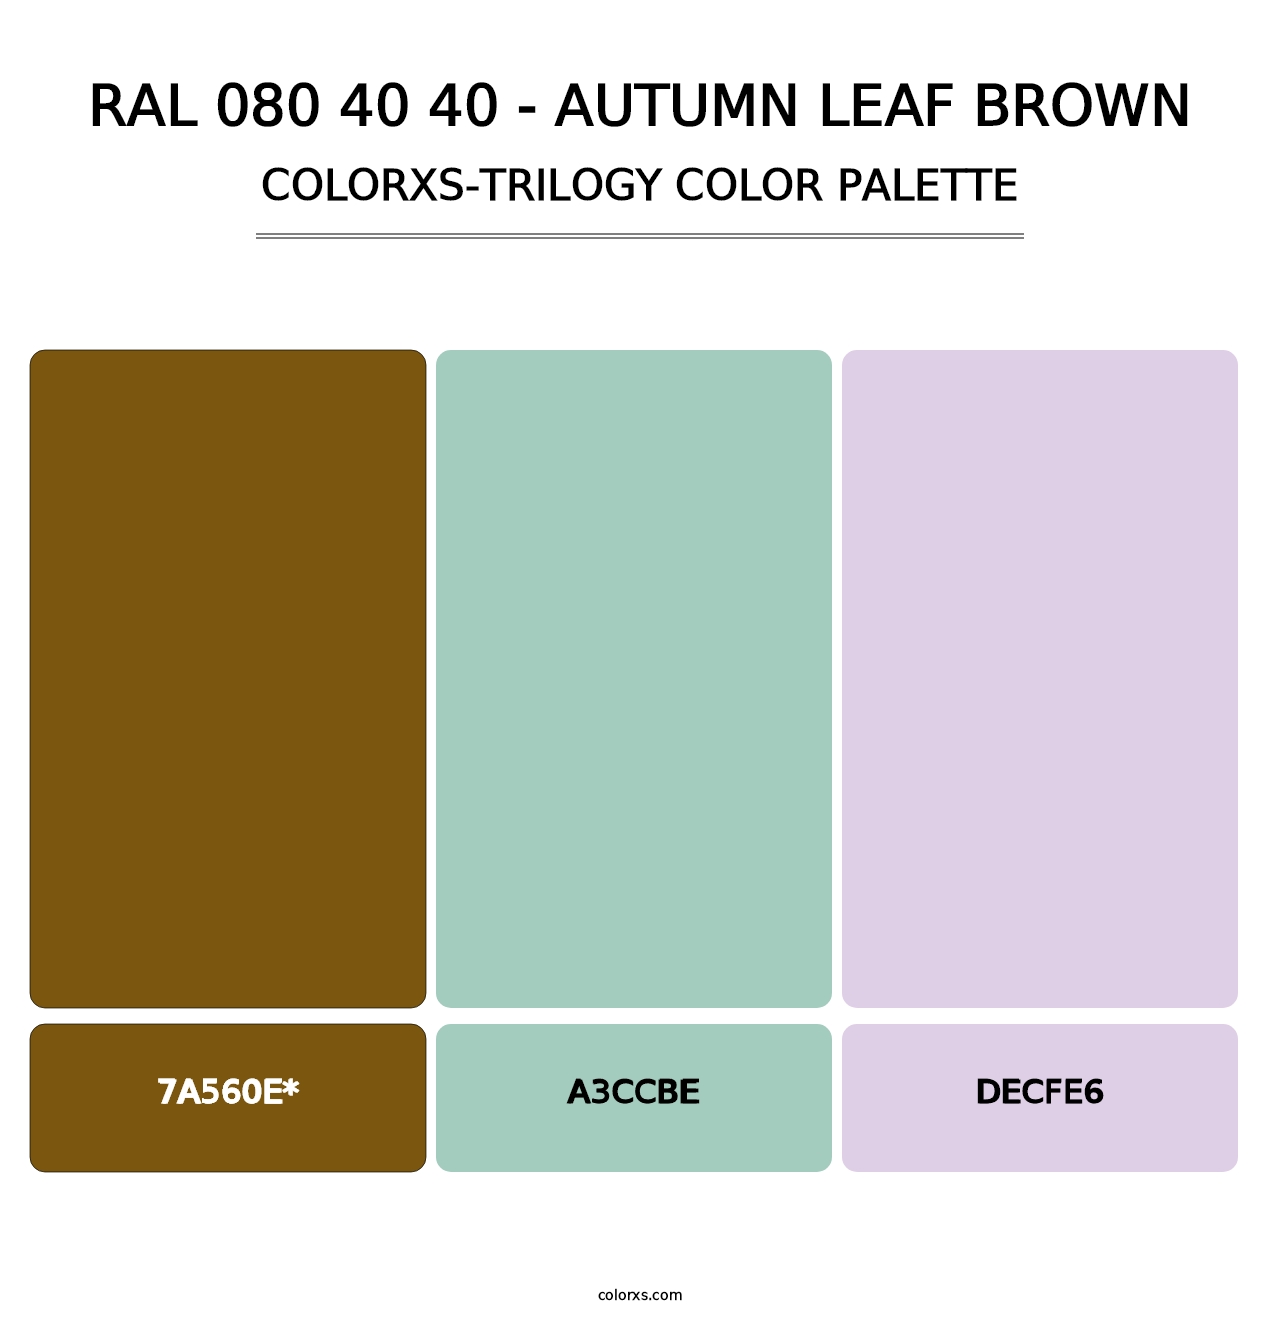 RAL 080 40 40 - Autumn Leaf Brown - Colorxs Trilogy Palette